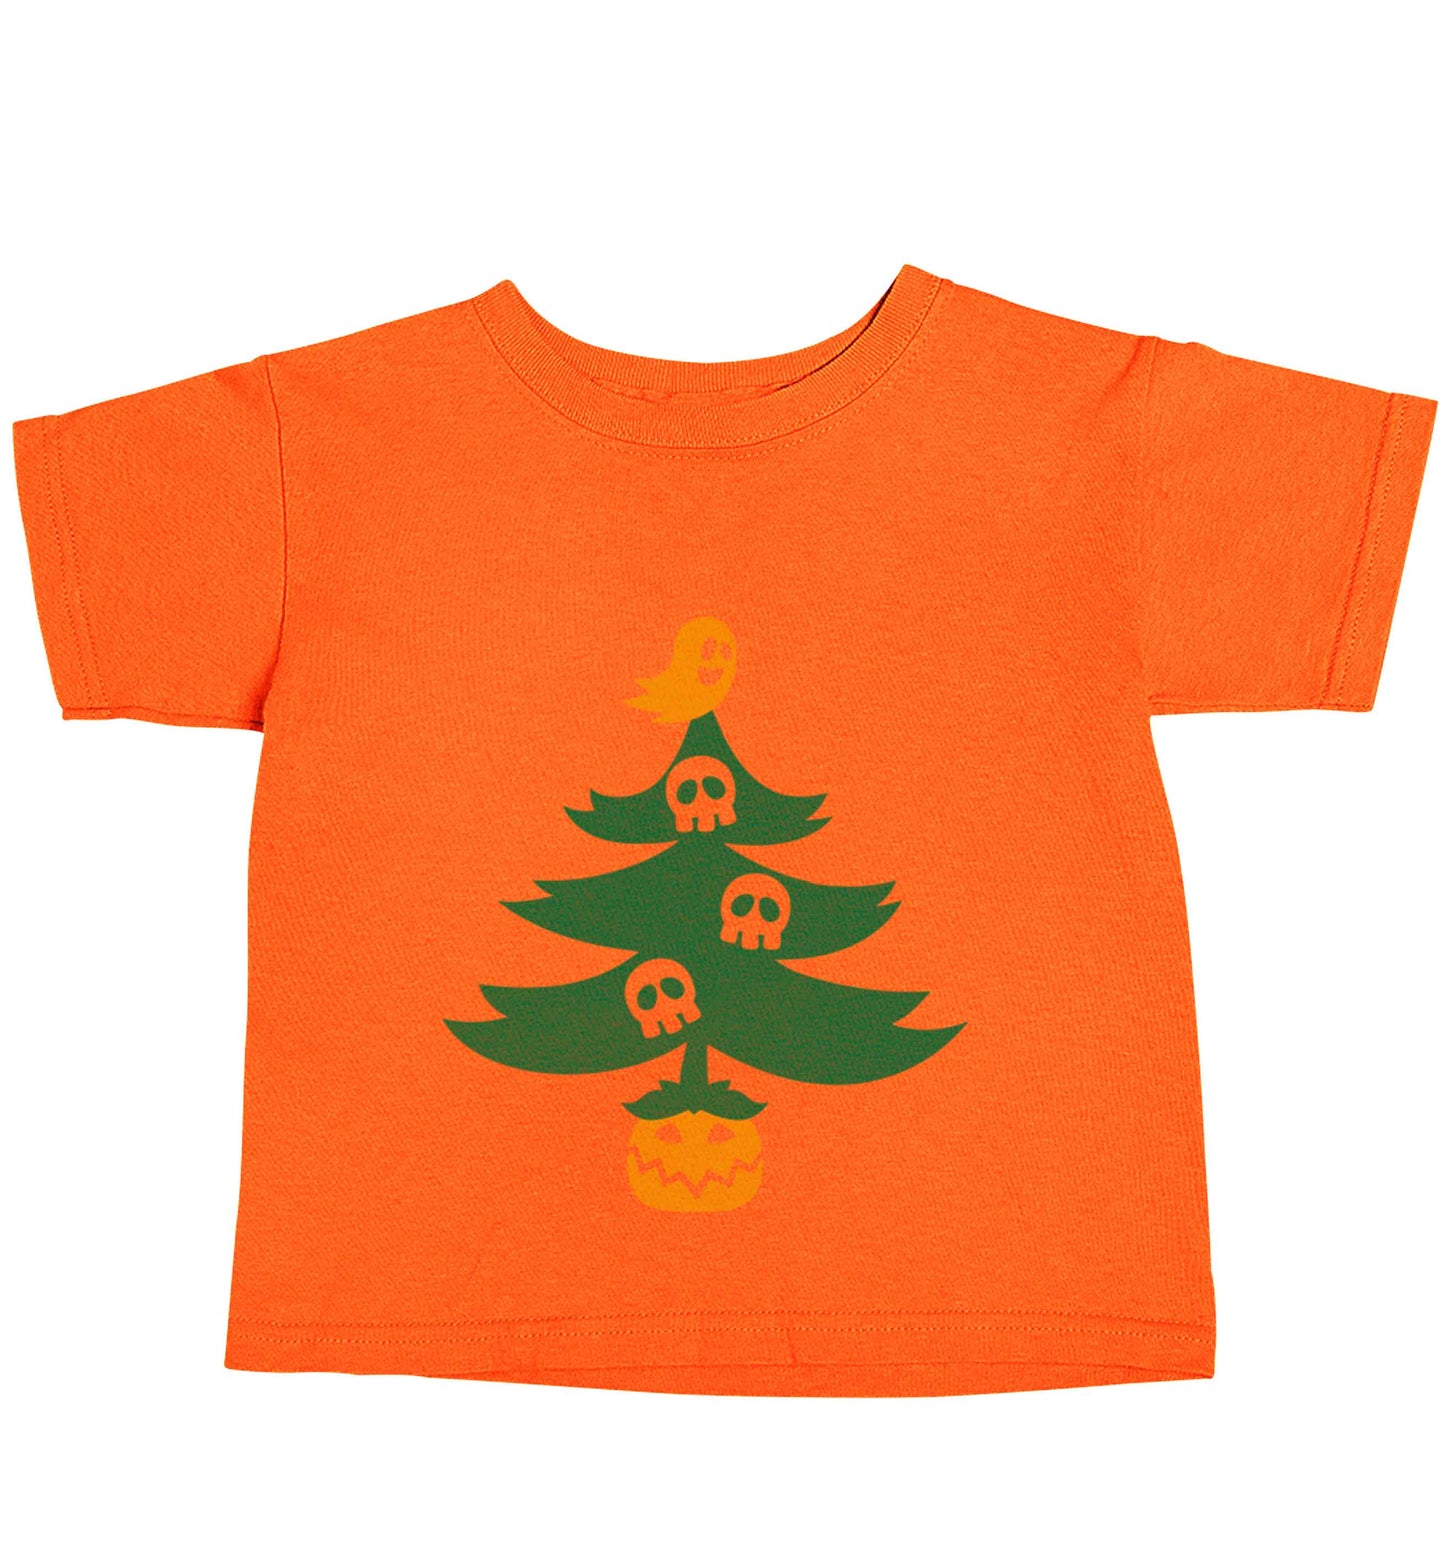 Halloween Christmas tree orange baby toddler Tshirt 2 Years